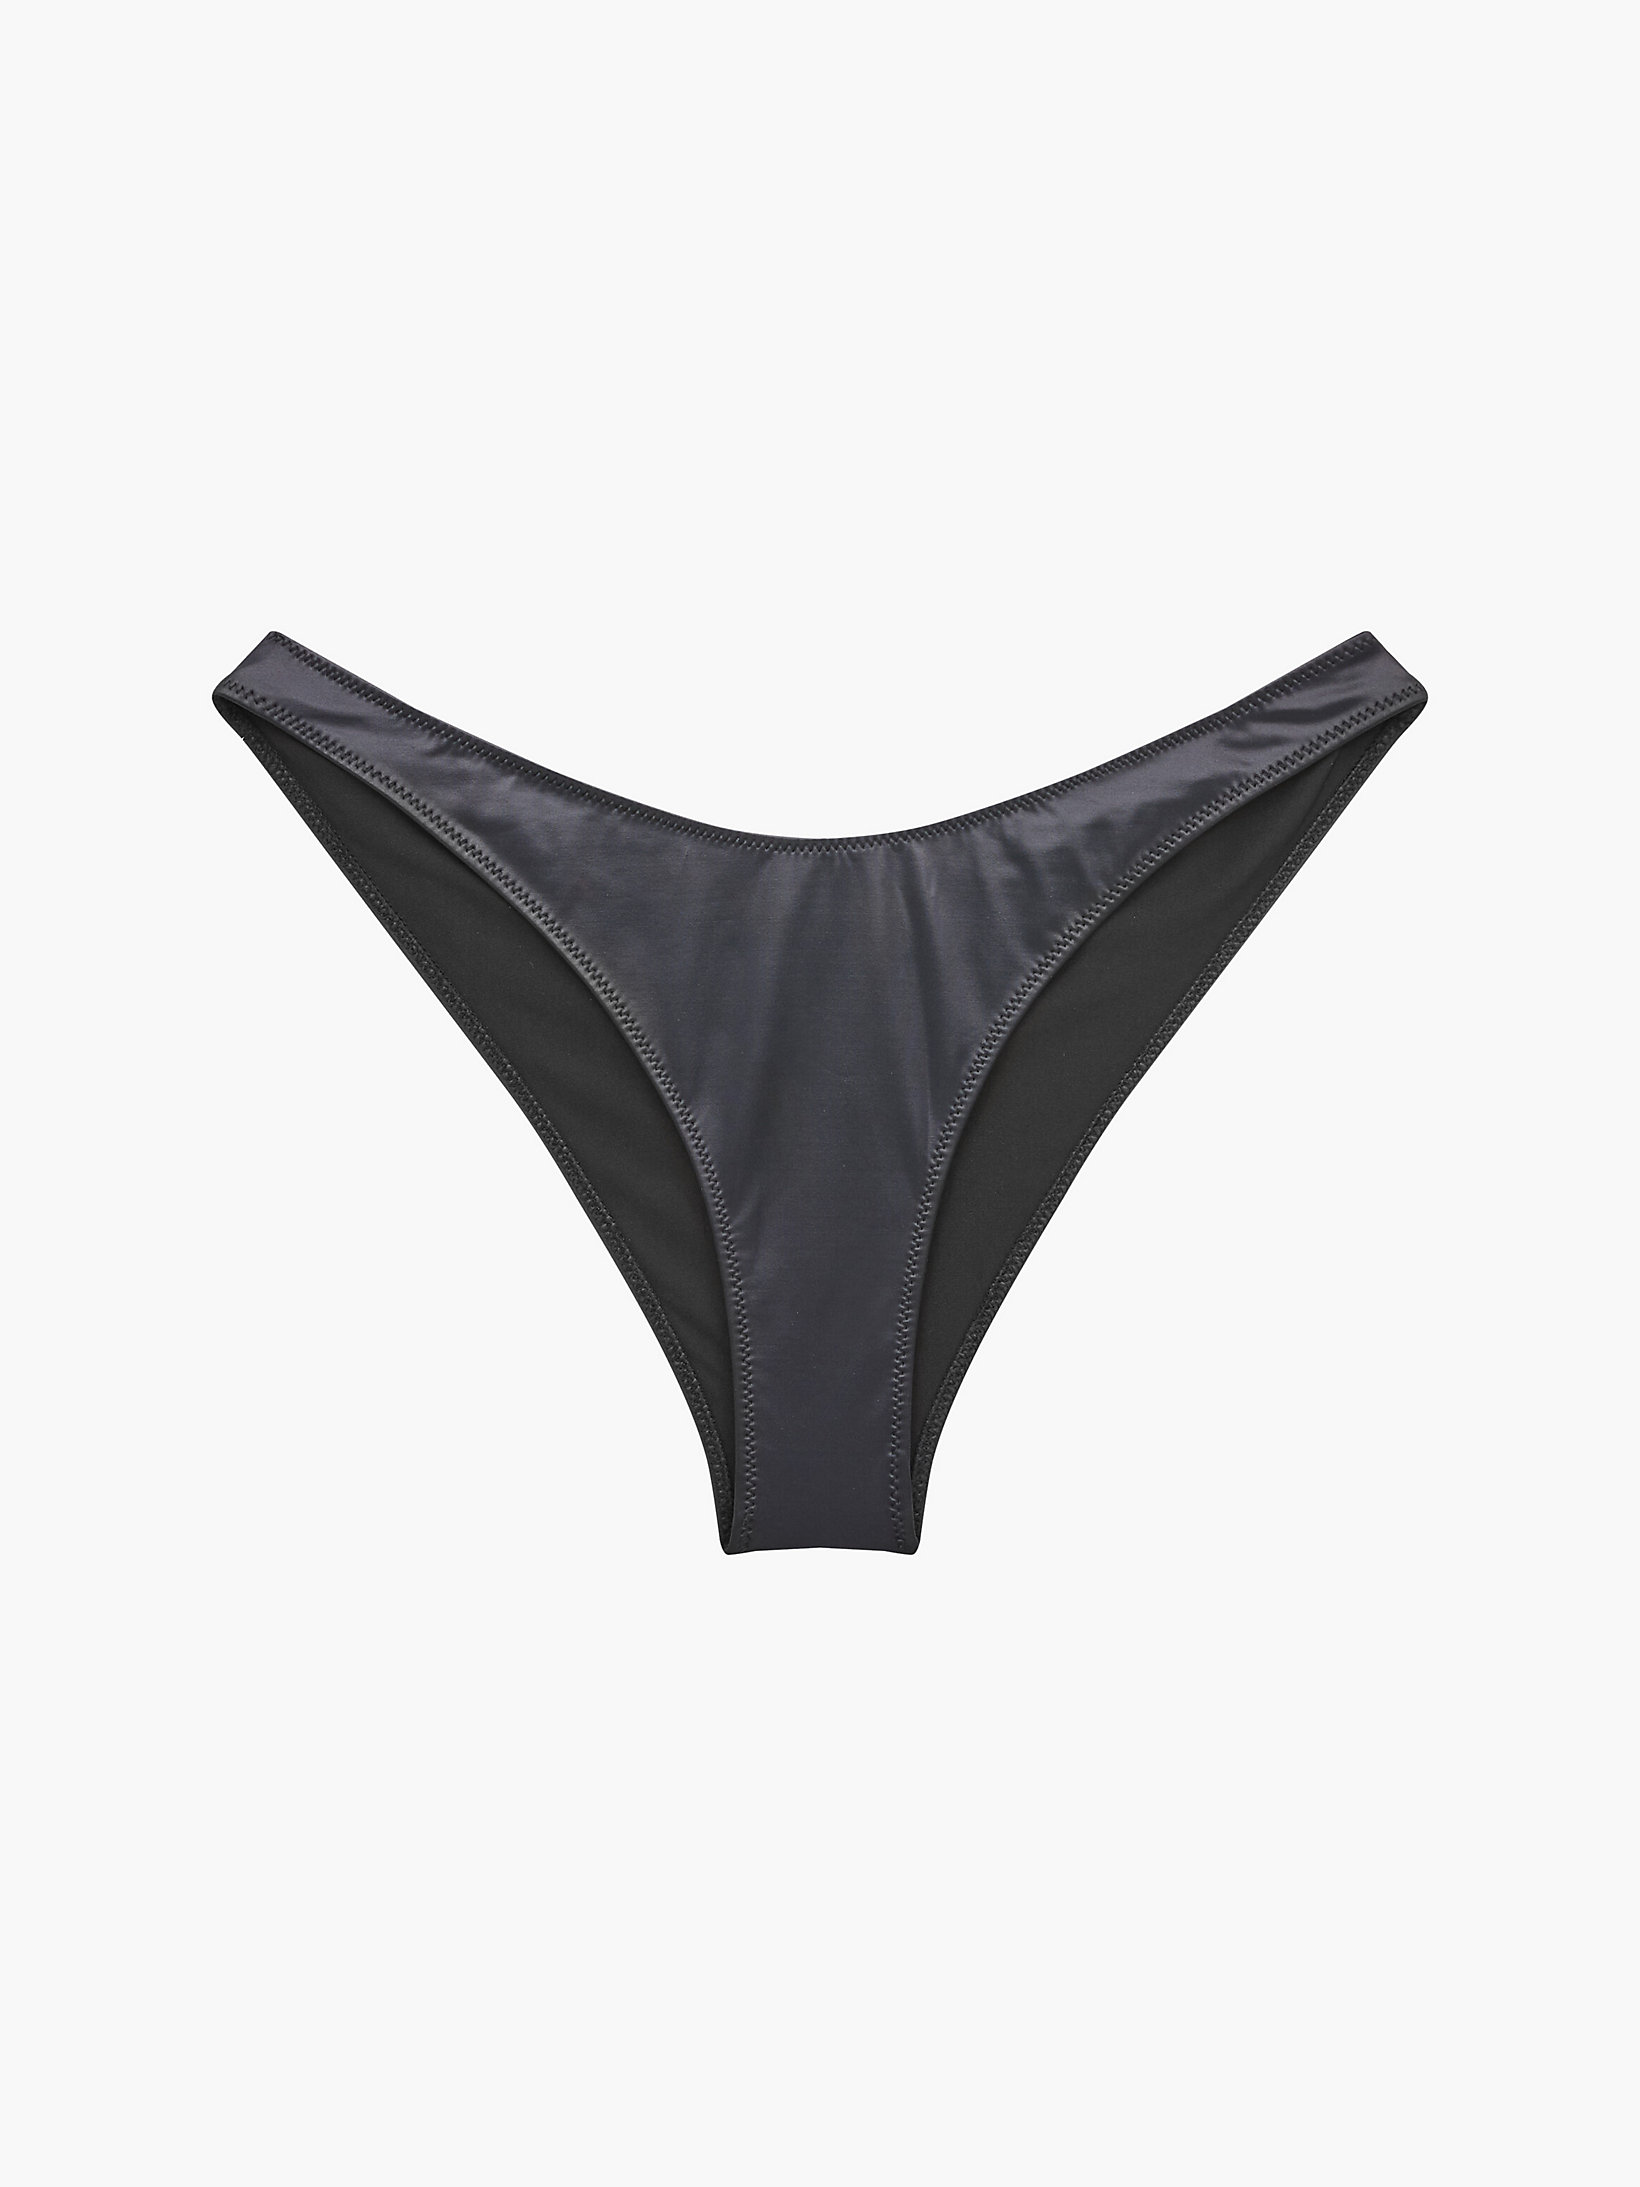 Pvh Black Classic Bikini Bottom - CK Foil undefined women Calvin Klein